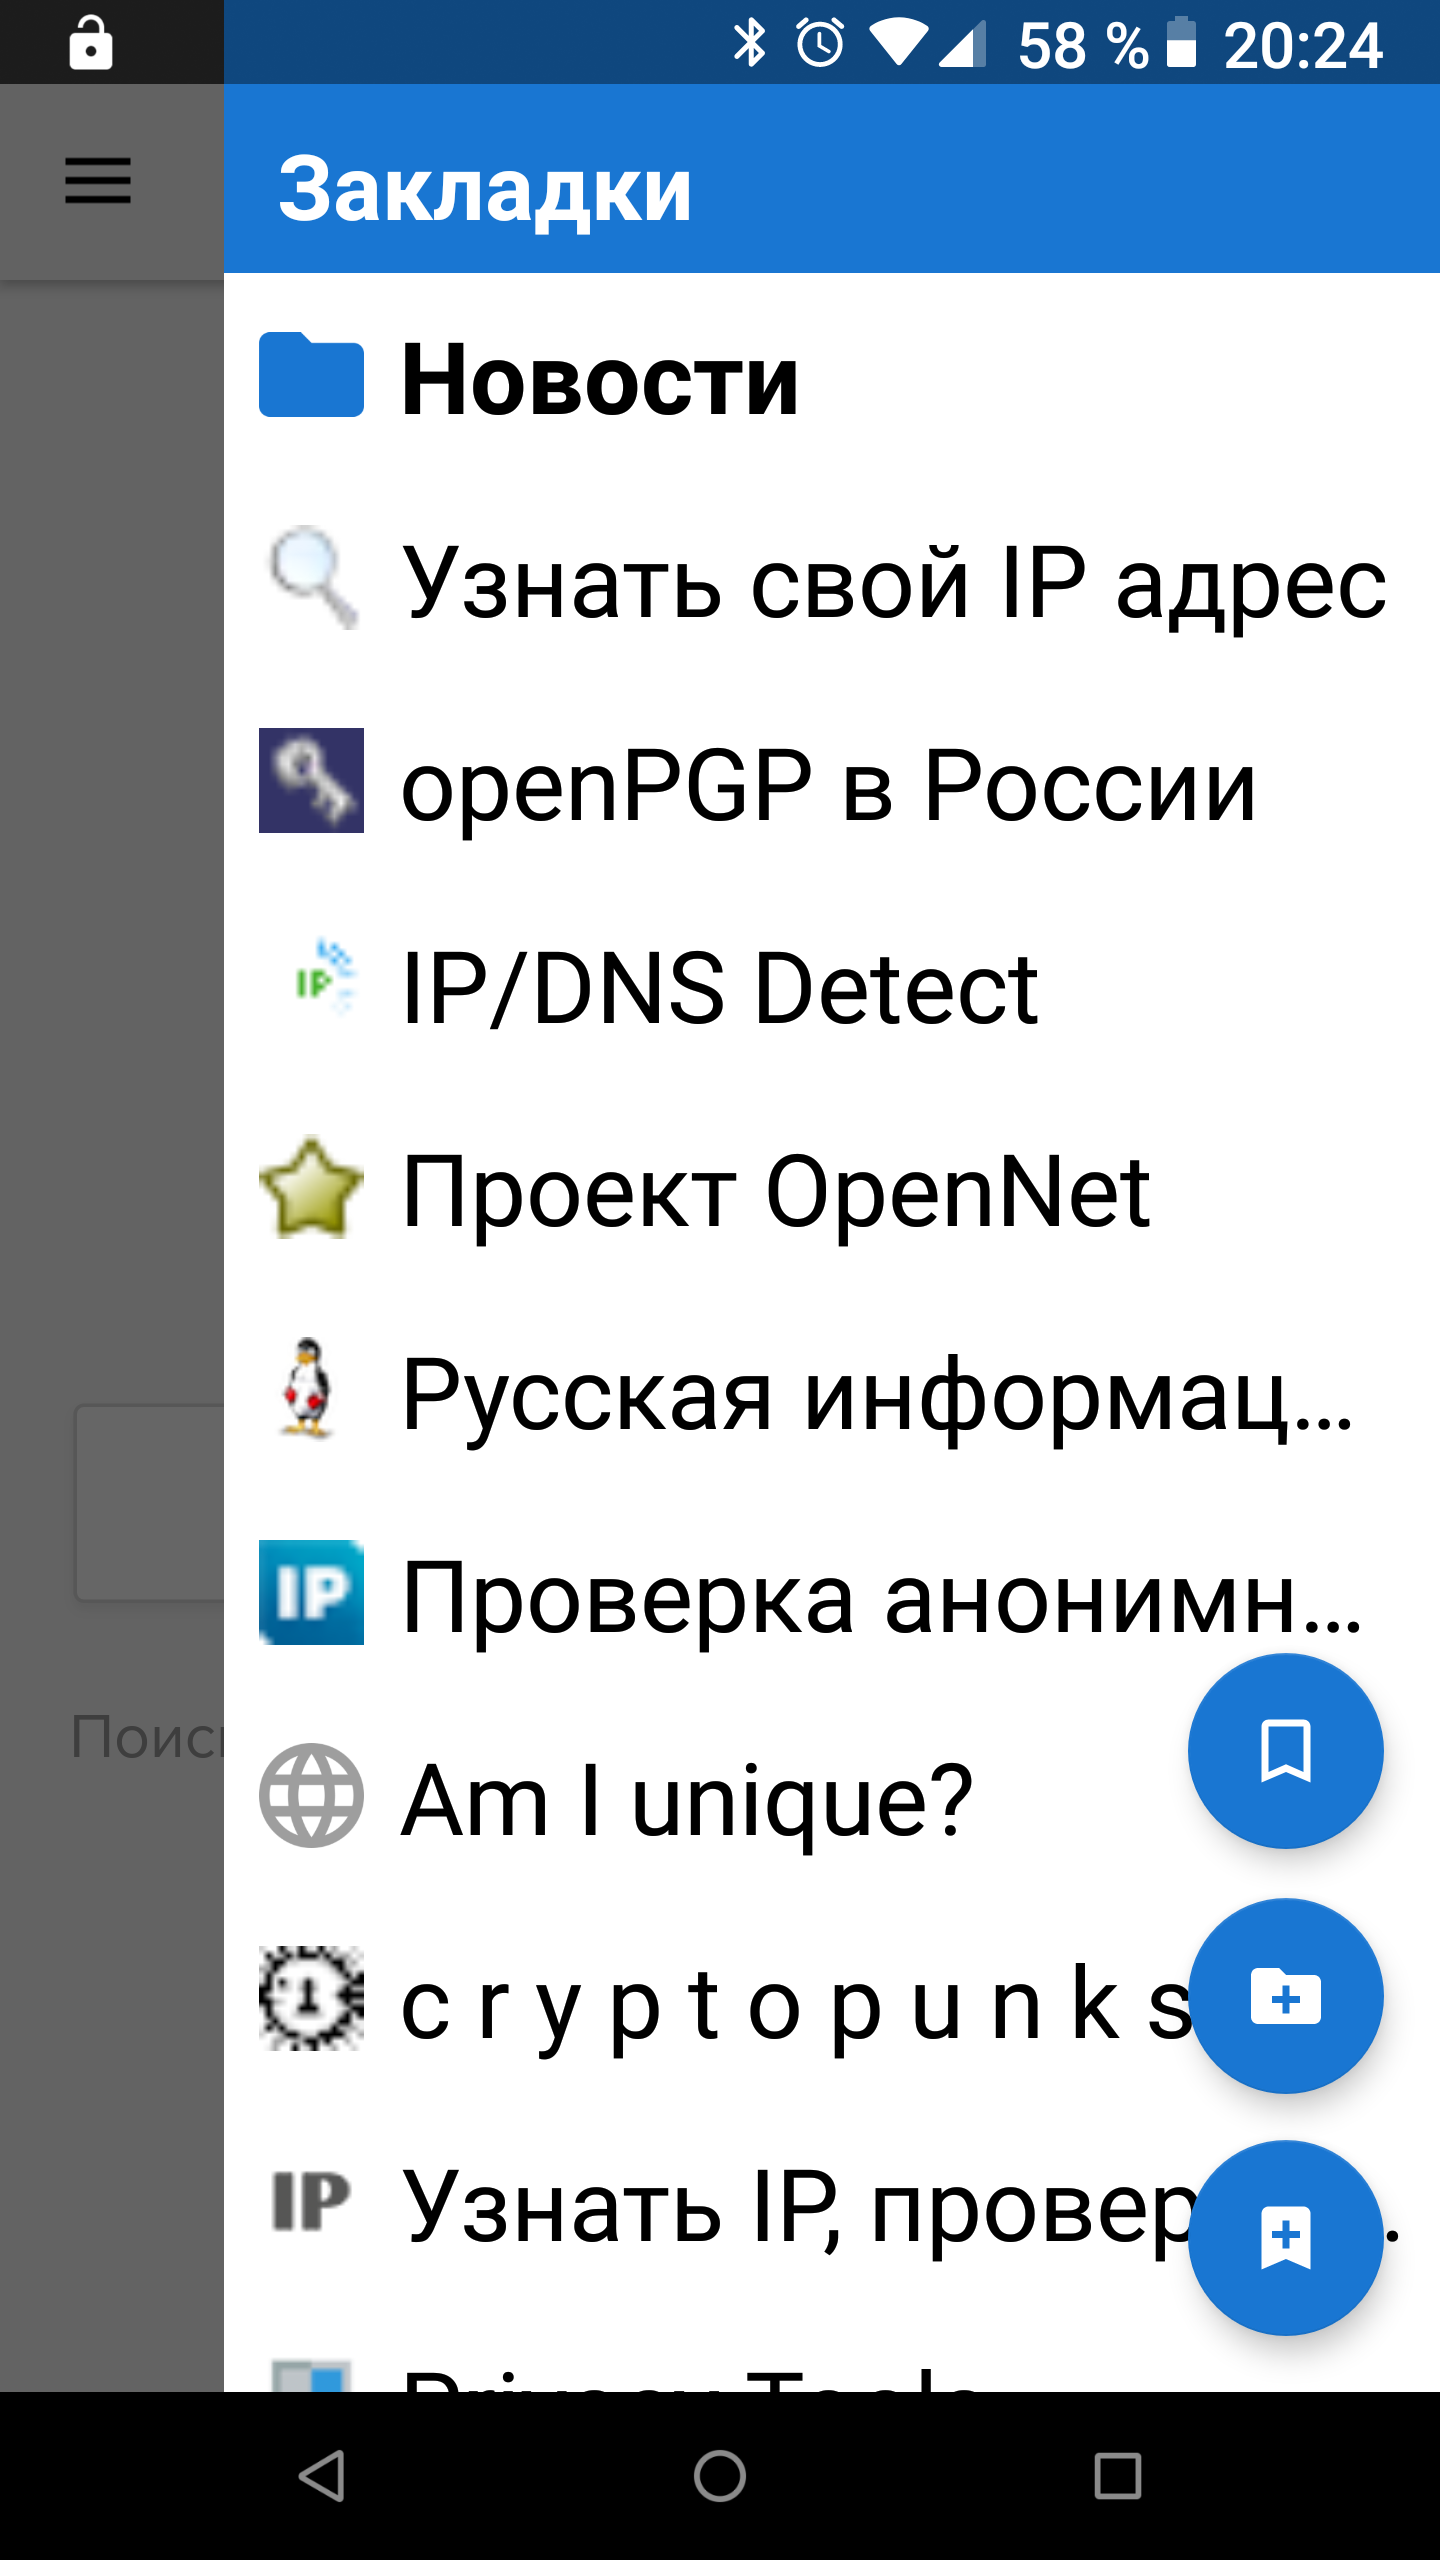 fastlane/metadata/android/ru-RU/images/phoneScreenshots/06-Bookmarks.png